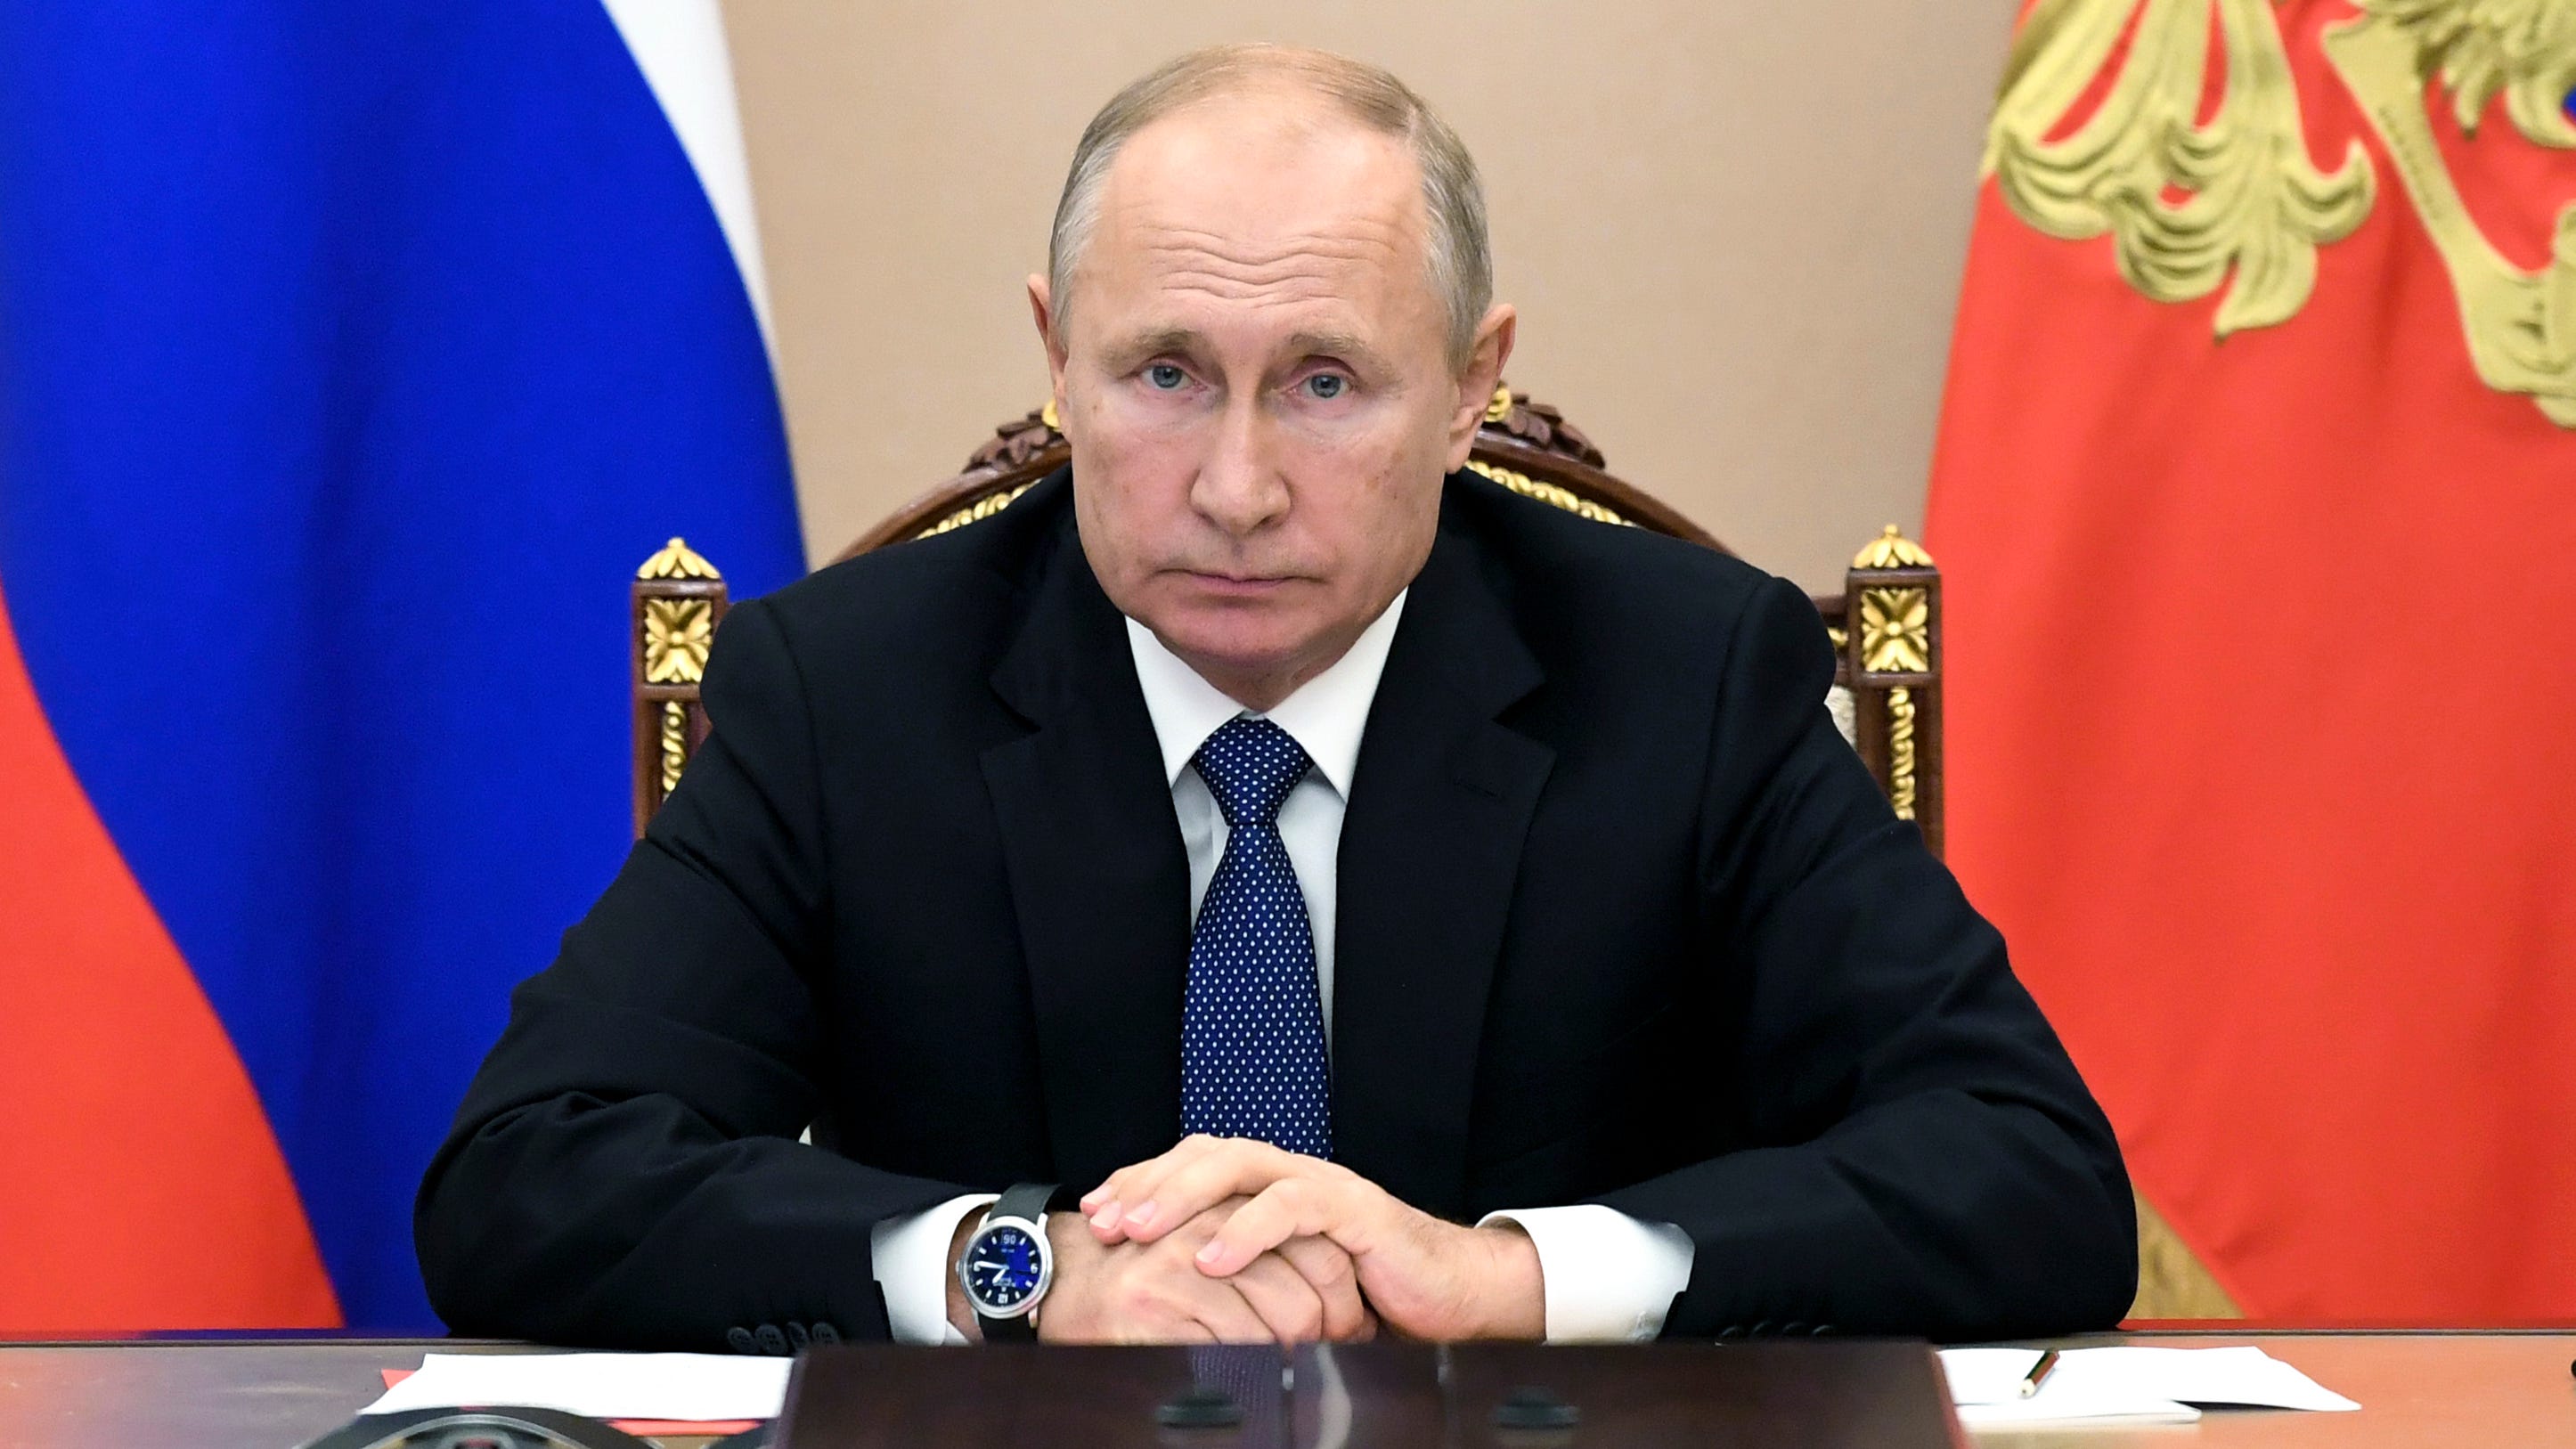 Vladimir Putin Holds Biden Congratulations Awaits Legal Procedures